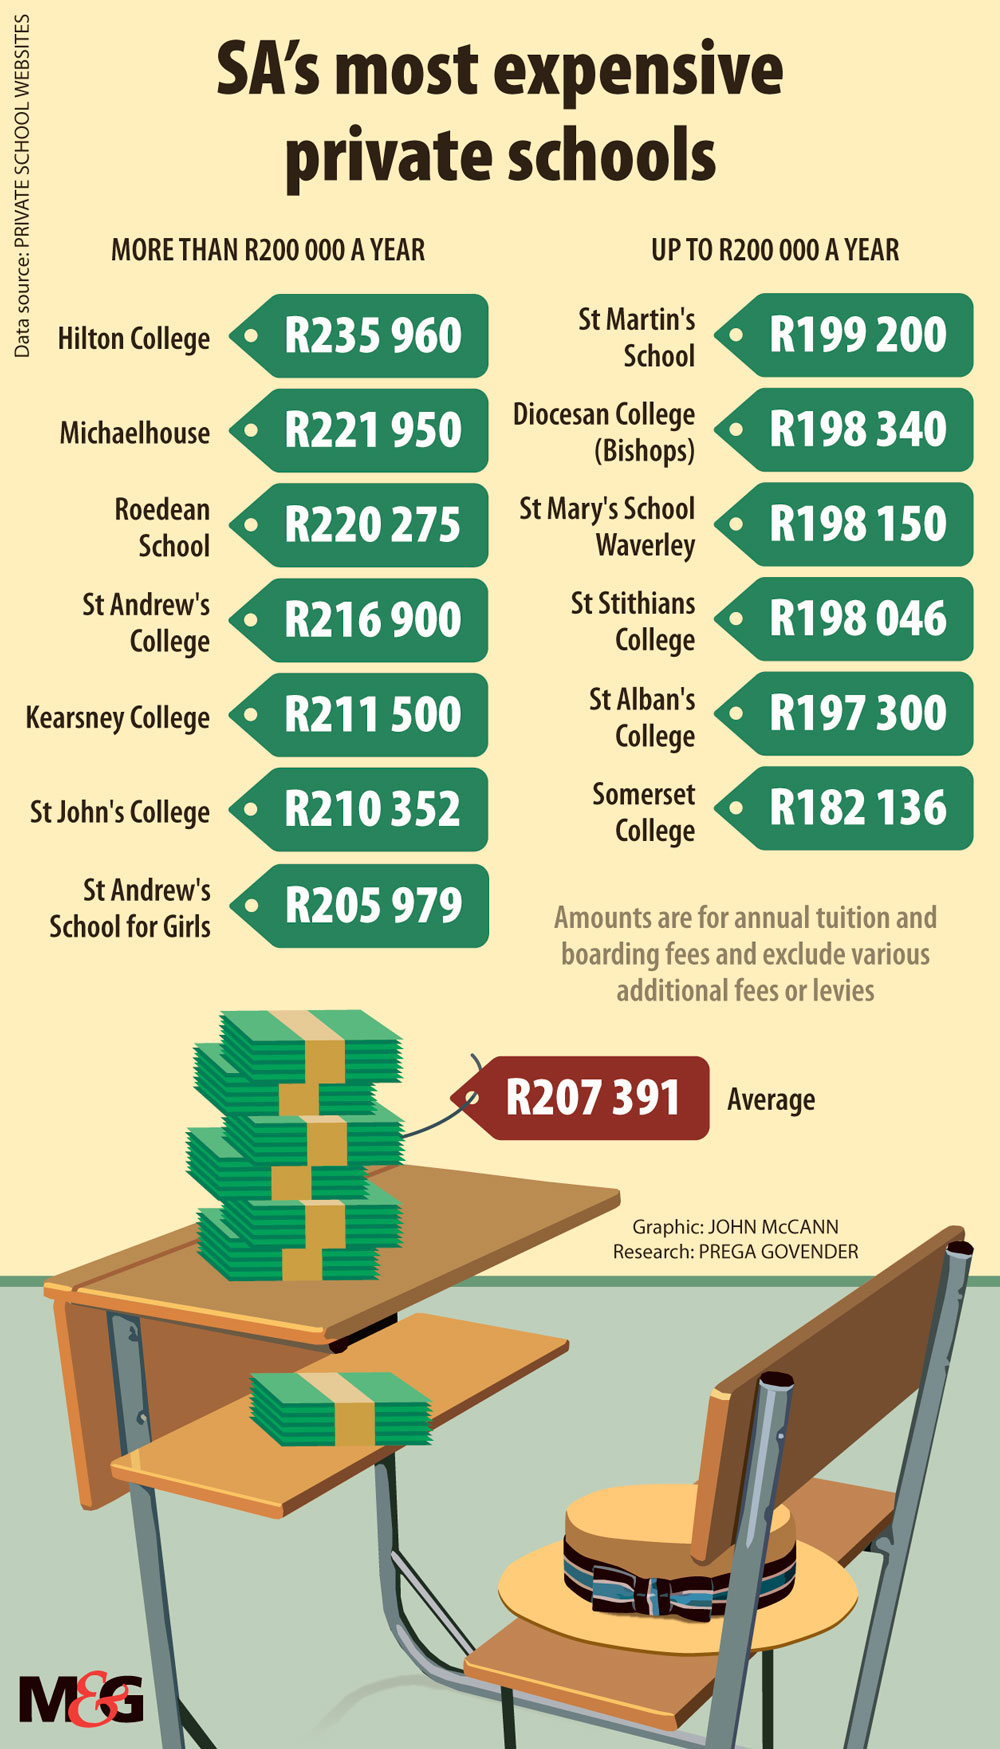 SA's most expensive private schools